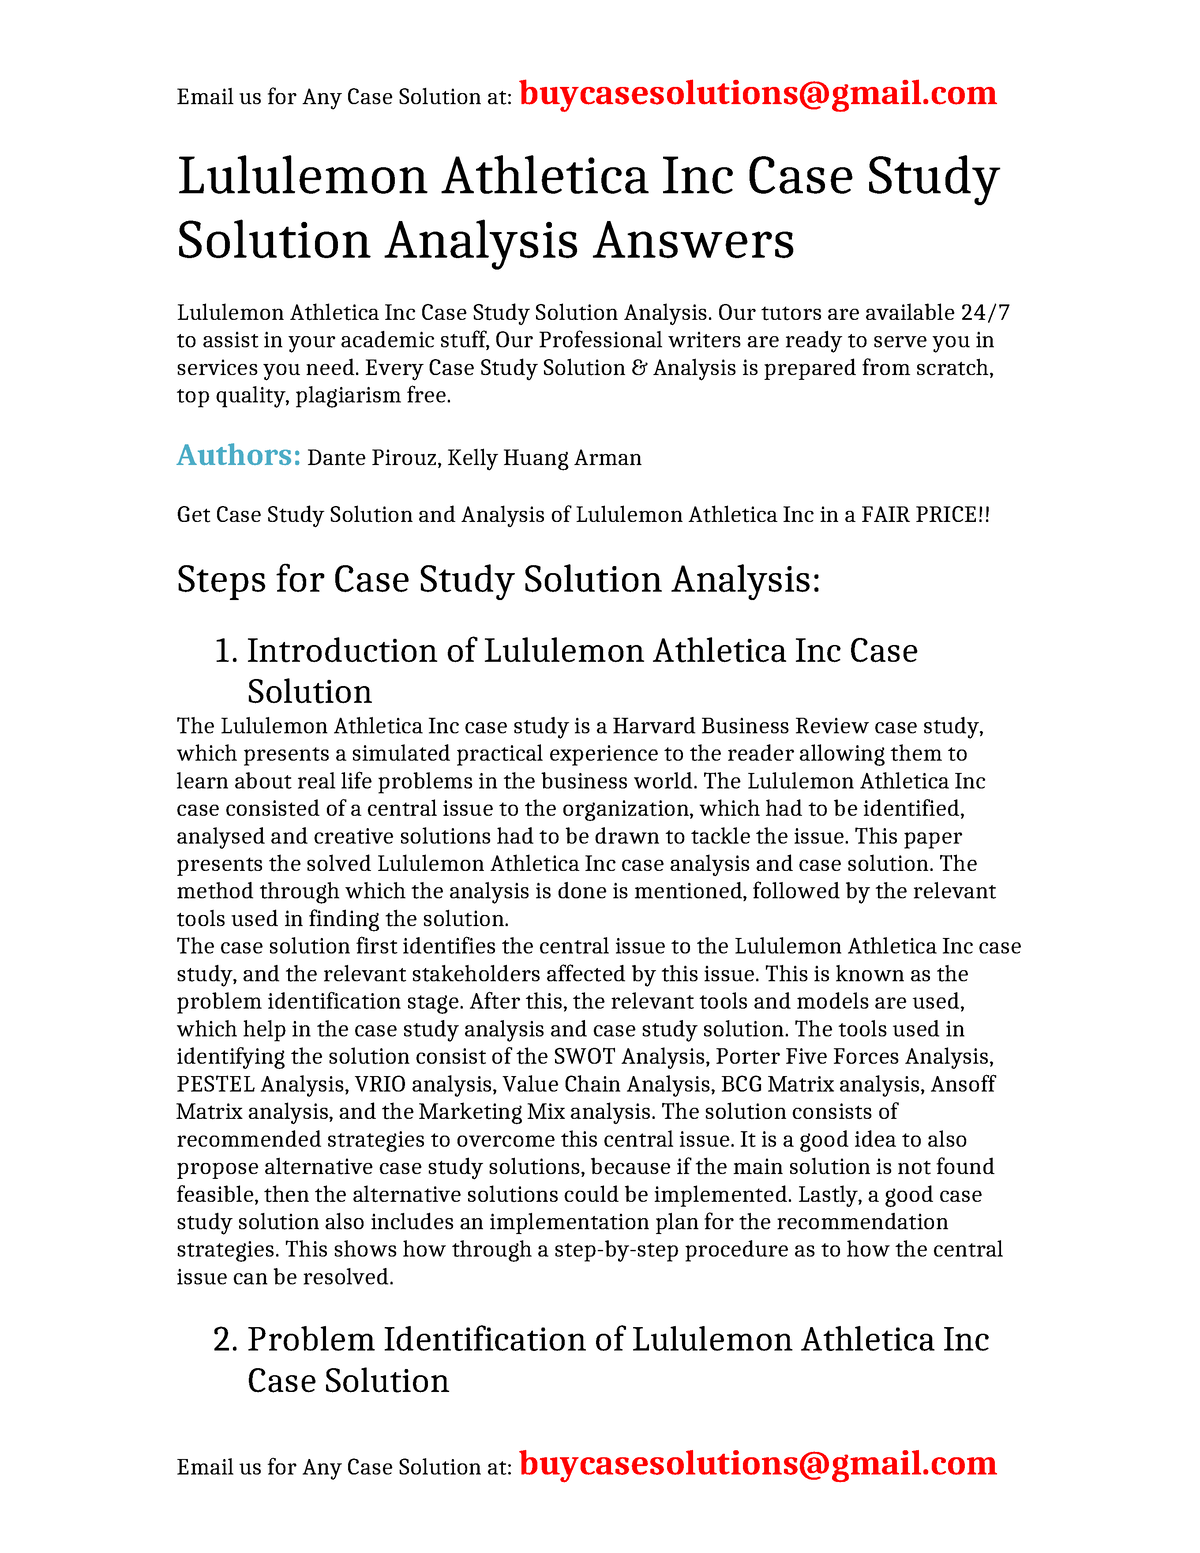 Lululemon Athletica Inc. Case Solution And Analysis, HBR Case Study  Solution & Analysis of Harvard Case Studies